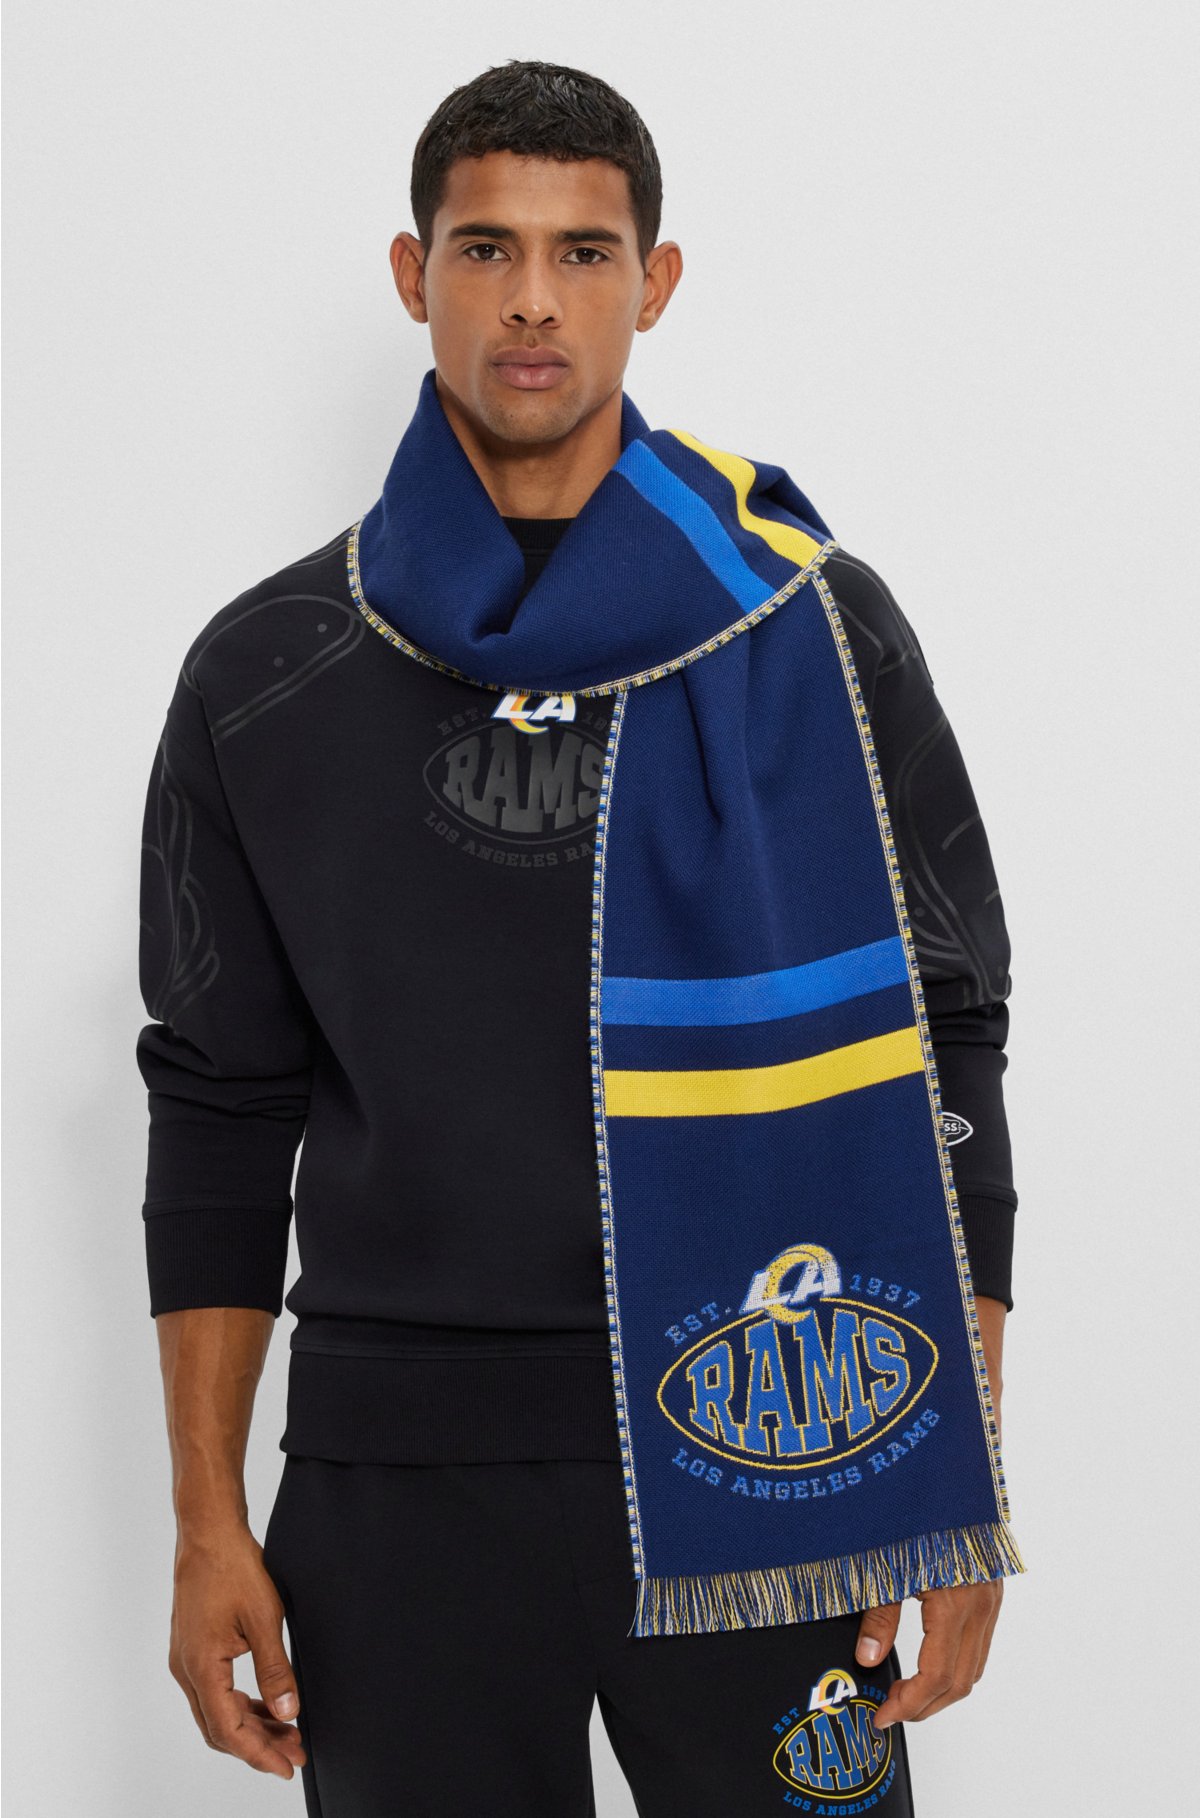 BOSS x NFL logo scarf with LA Rams branding, Rams